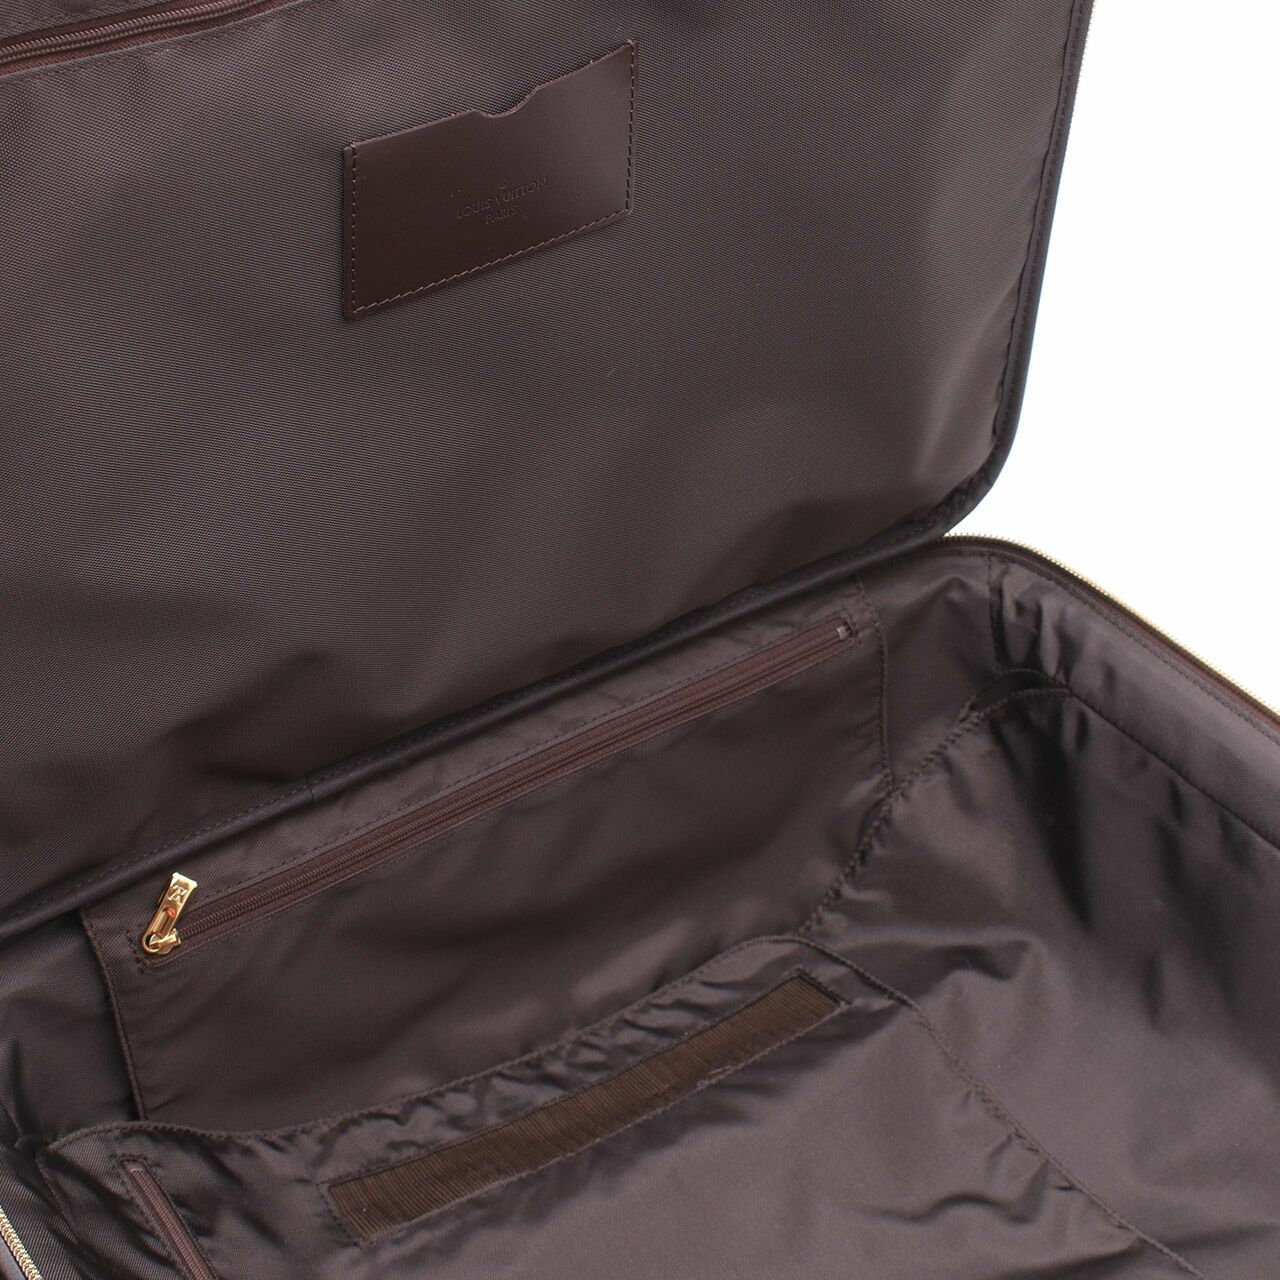 Louis Vuitton Damier Ebene Suitcase Luggage